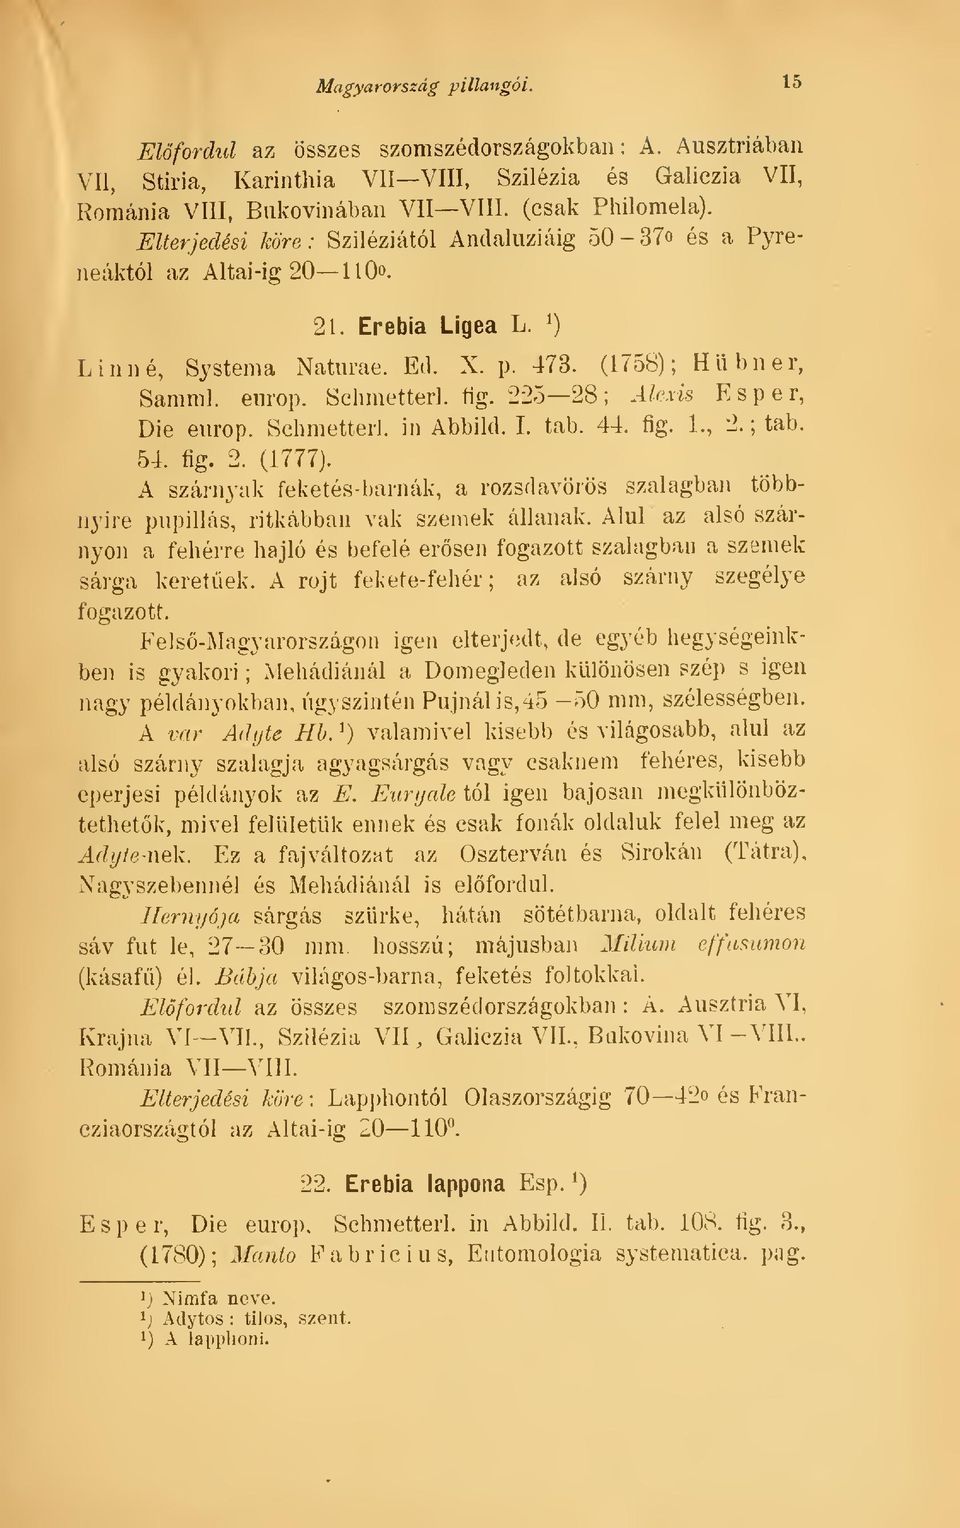 225 28; Alexis Esper, Die europ. Sehmetterl. in Abbild. L tab. 44. fig. 1., 2. ; tab. 54. fig. 2. (1777).